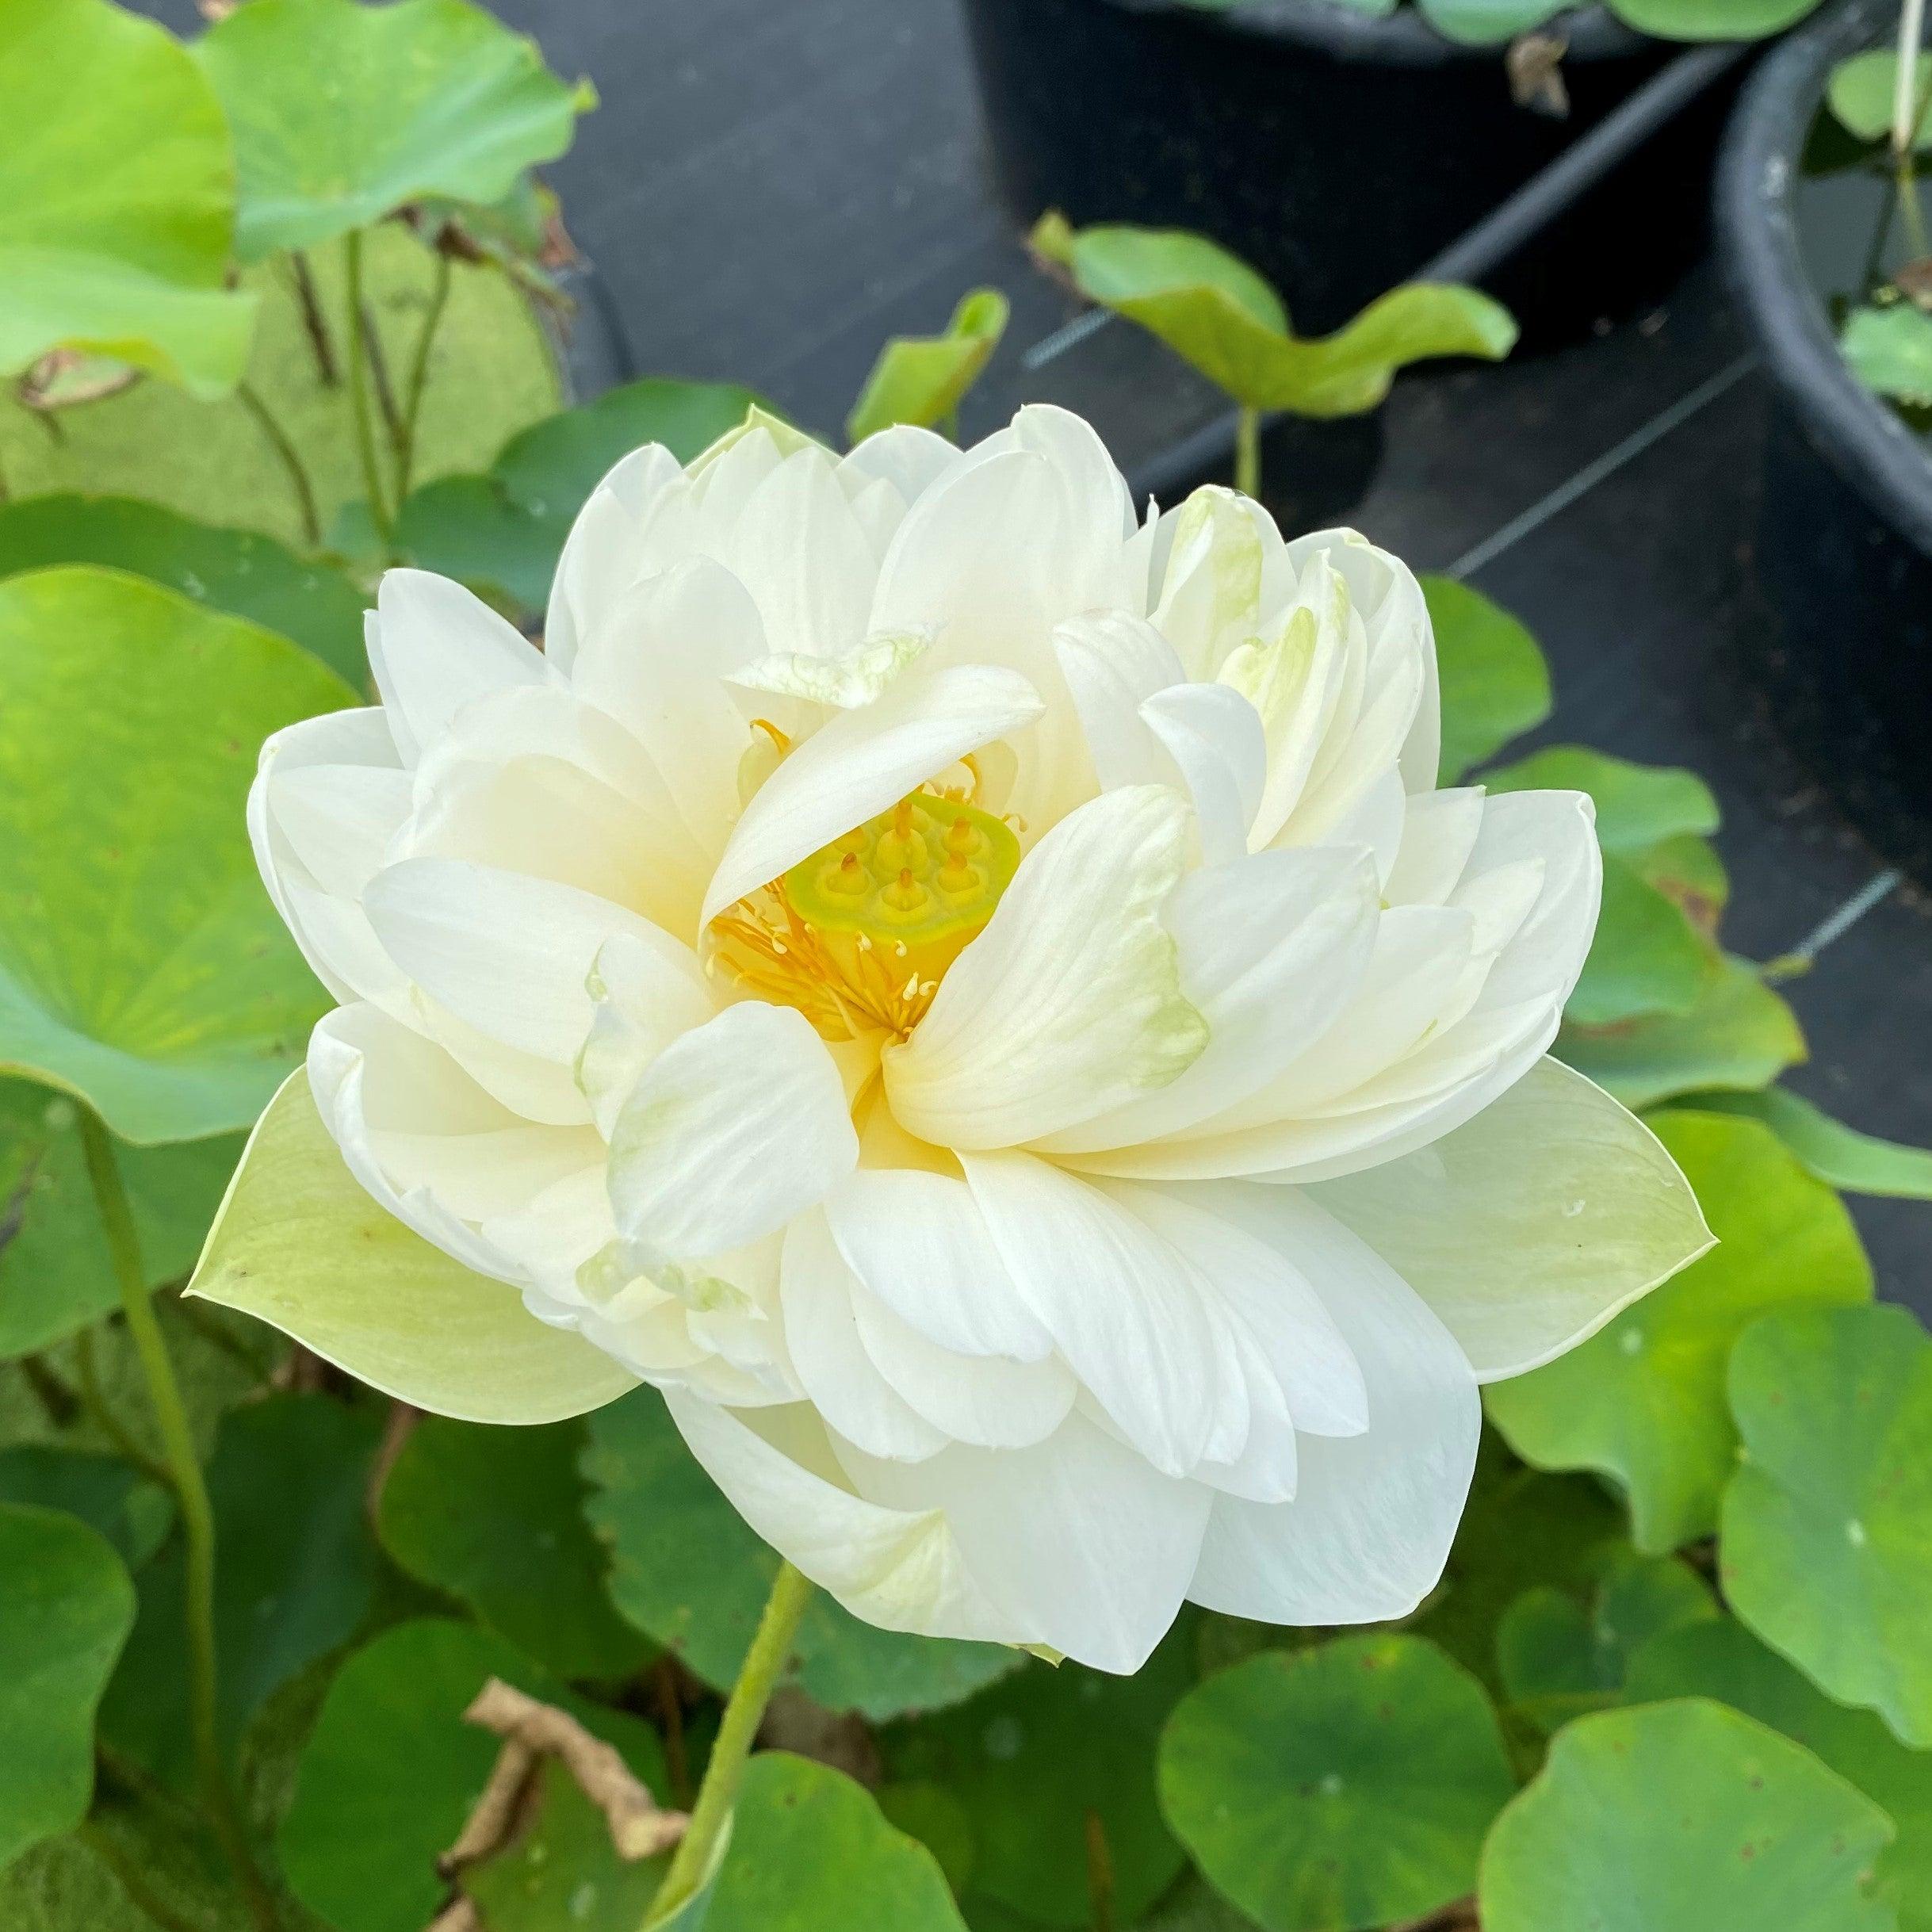 Puzhehei White Lotus (Bare Root) - Play It Koi